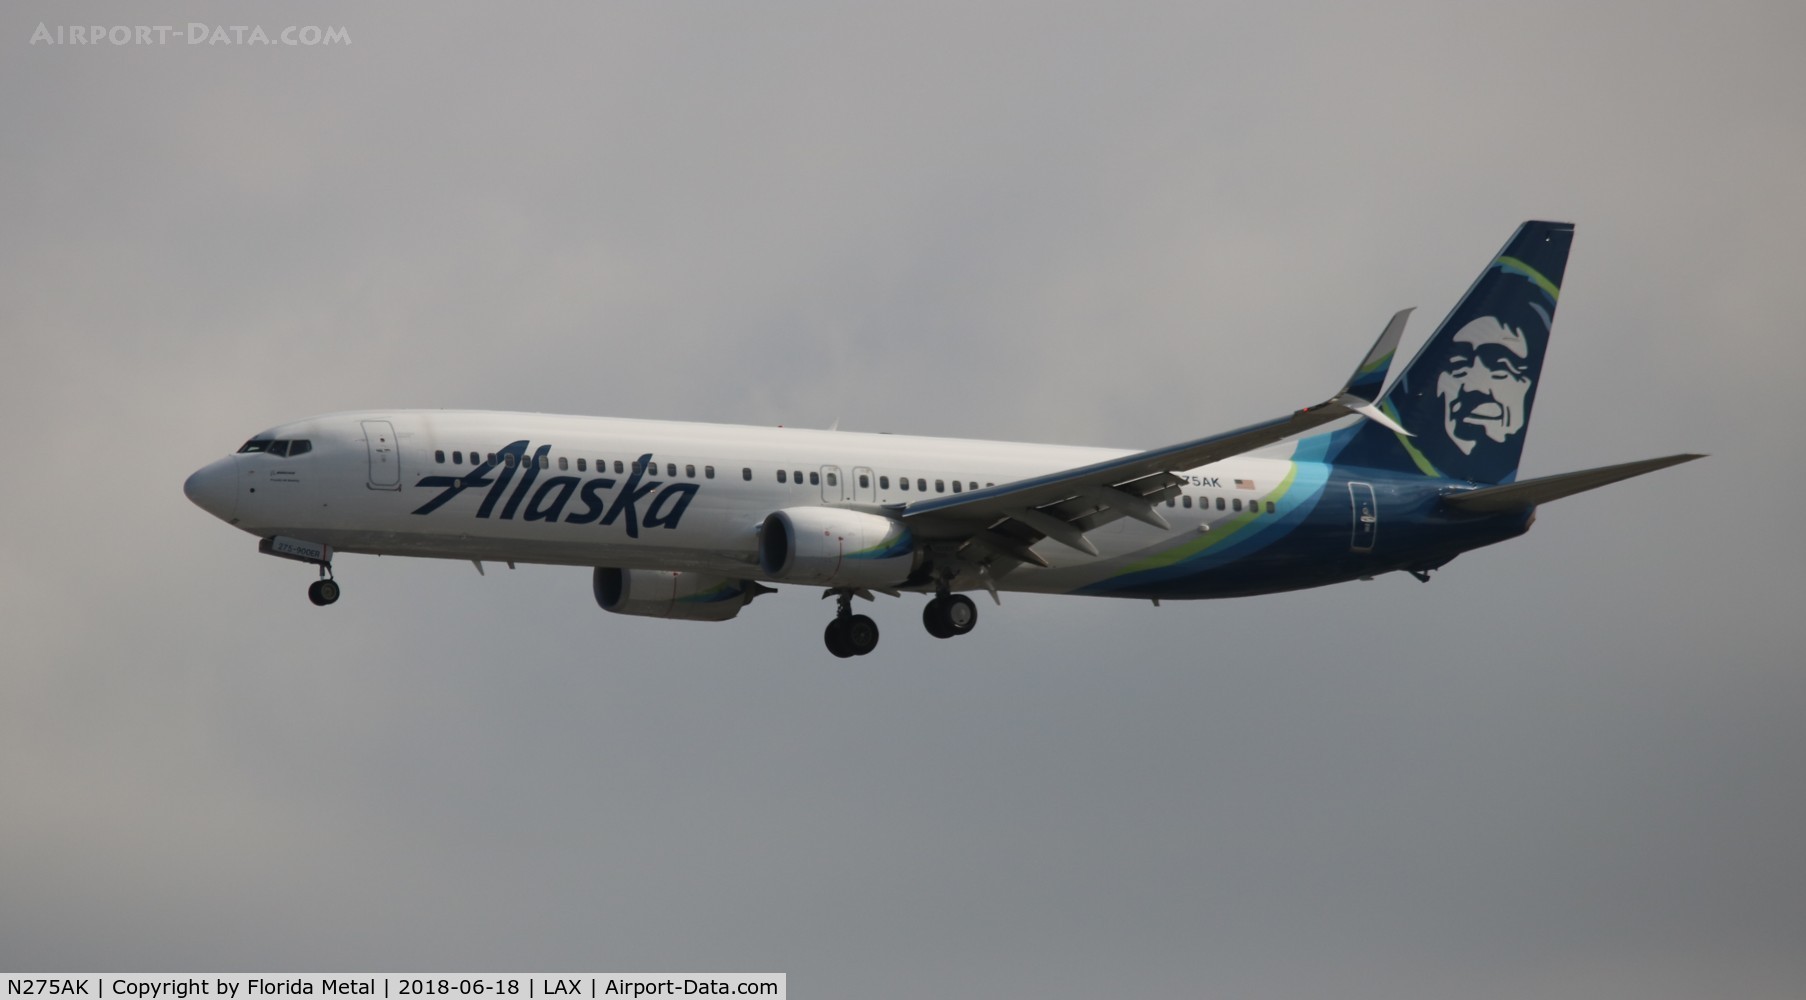 N275AK, 2017 Boeing 737-900/ER C/N 61556, Alaska